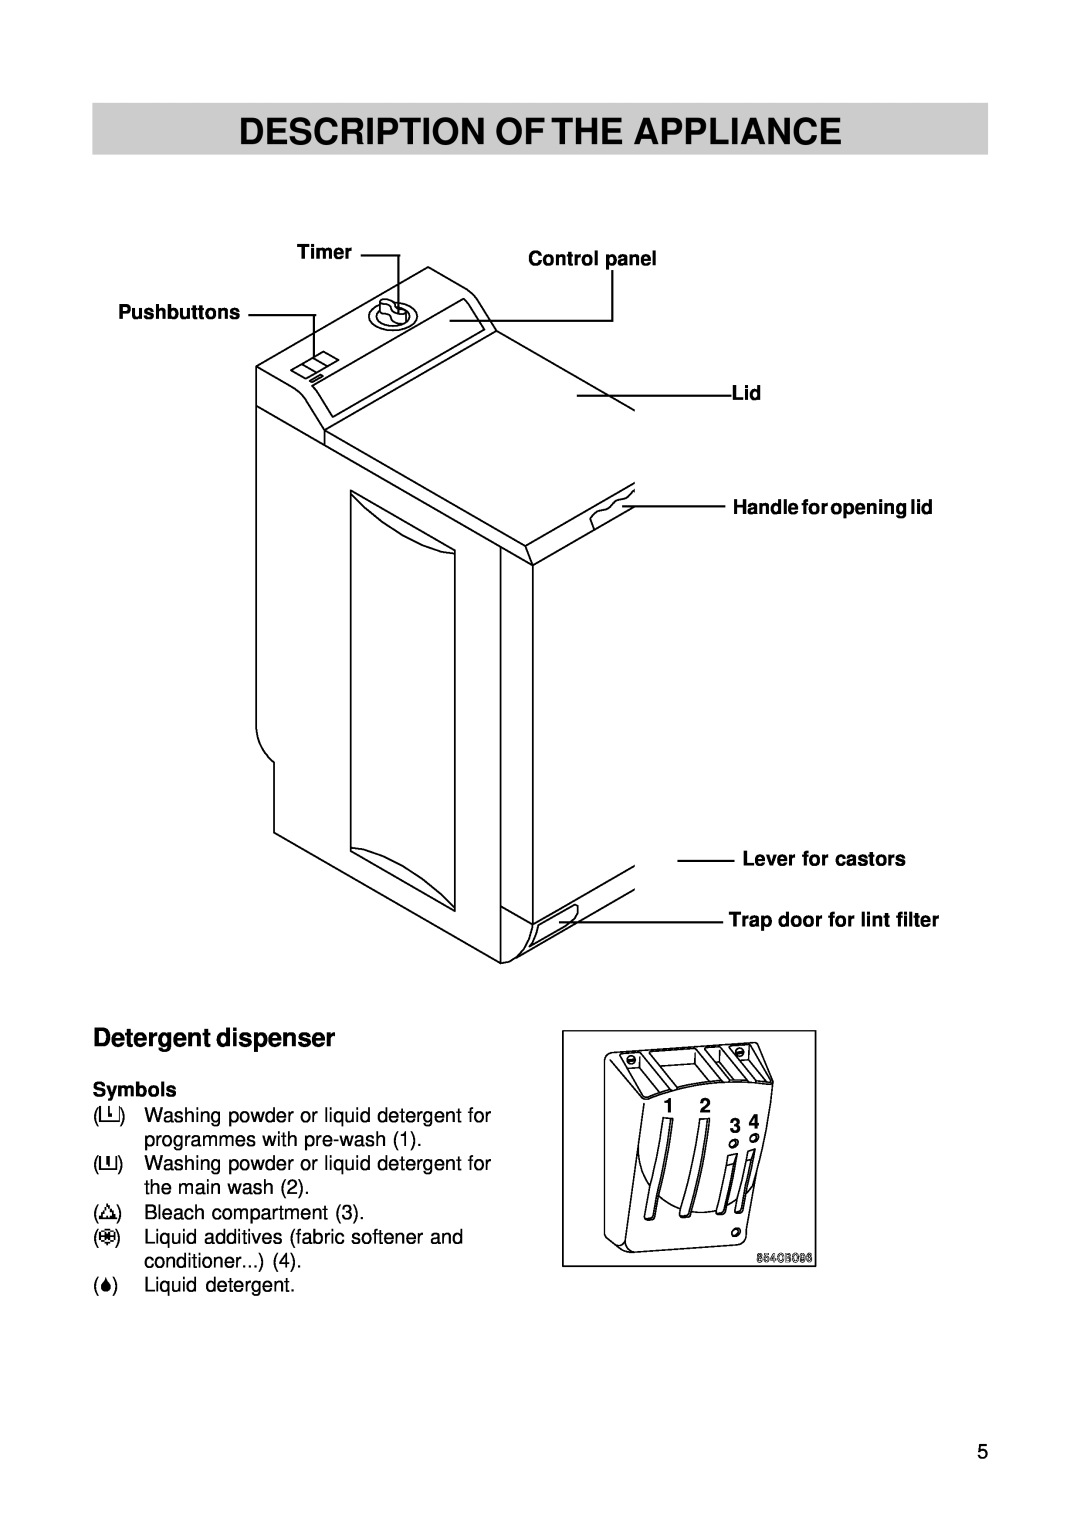 Zanussi TL 553 C Description Of The Appliance, Detergent dispenser, Timer Pushbuttons, Trap door for lint filter, Symbols 